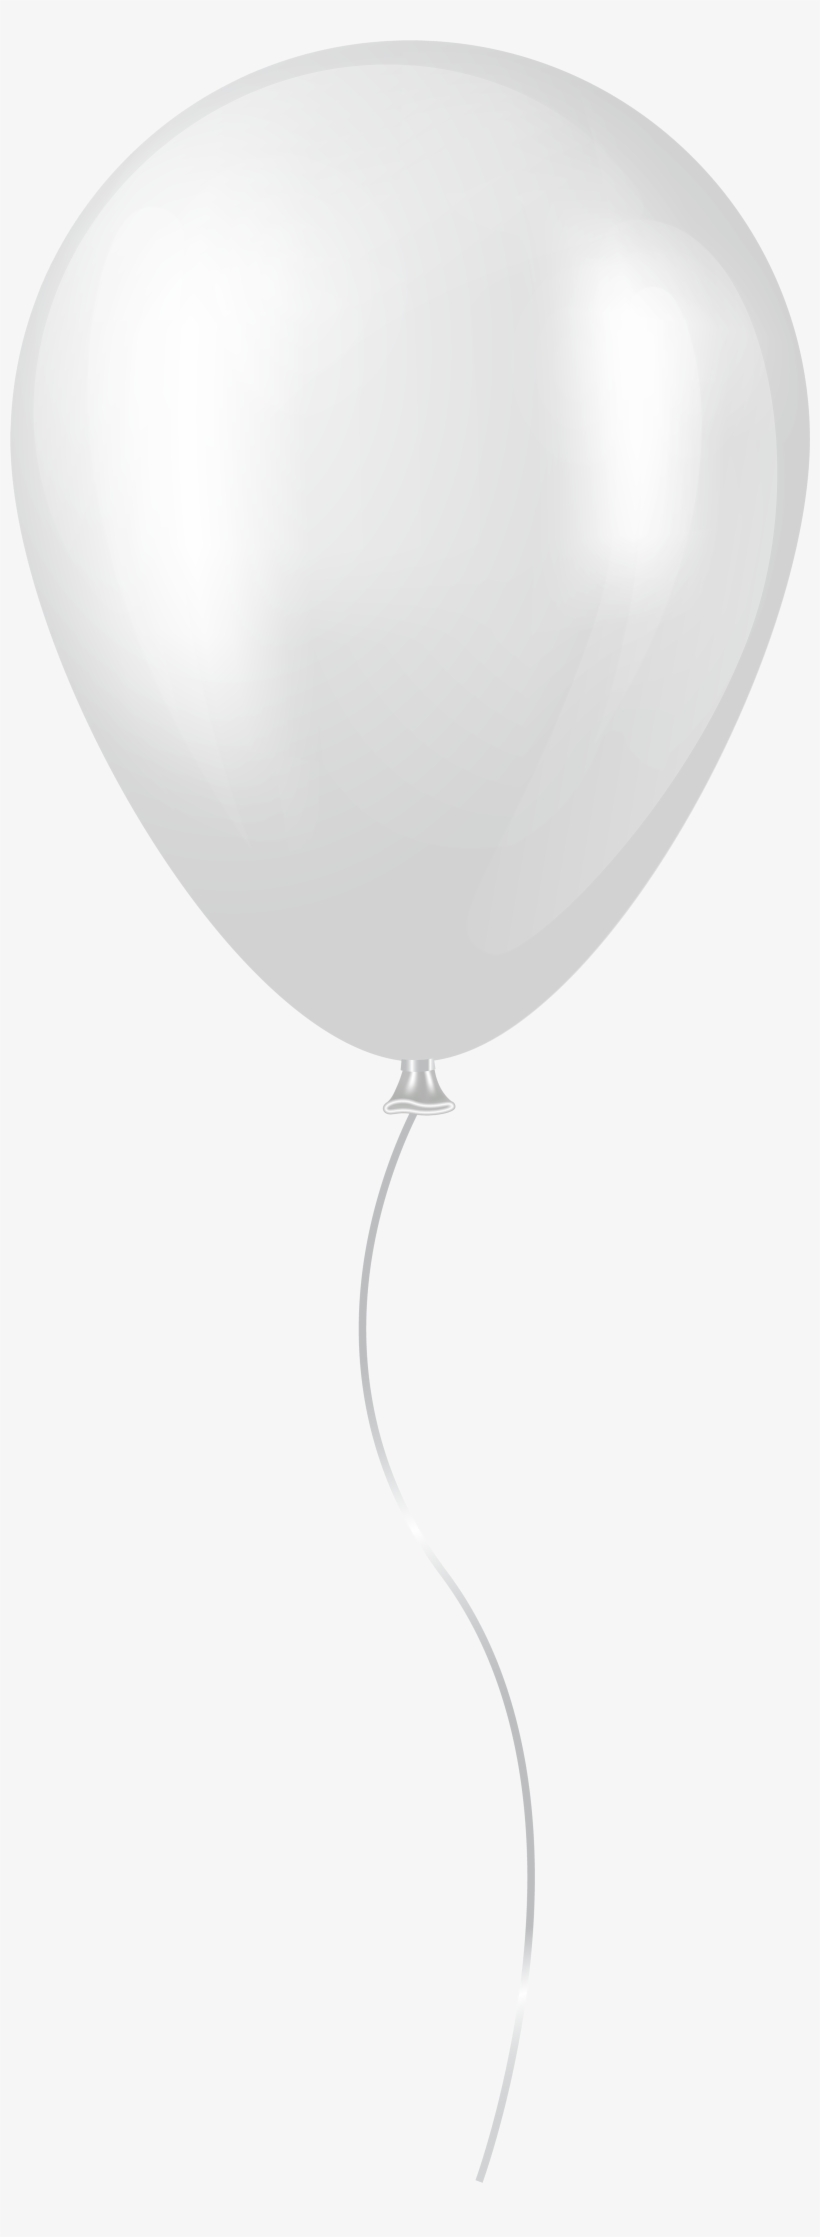 White Balloon Png